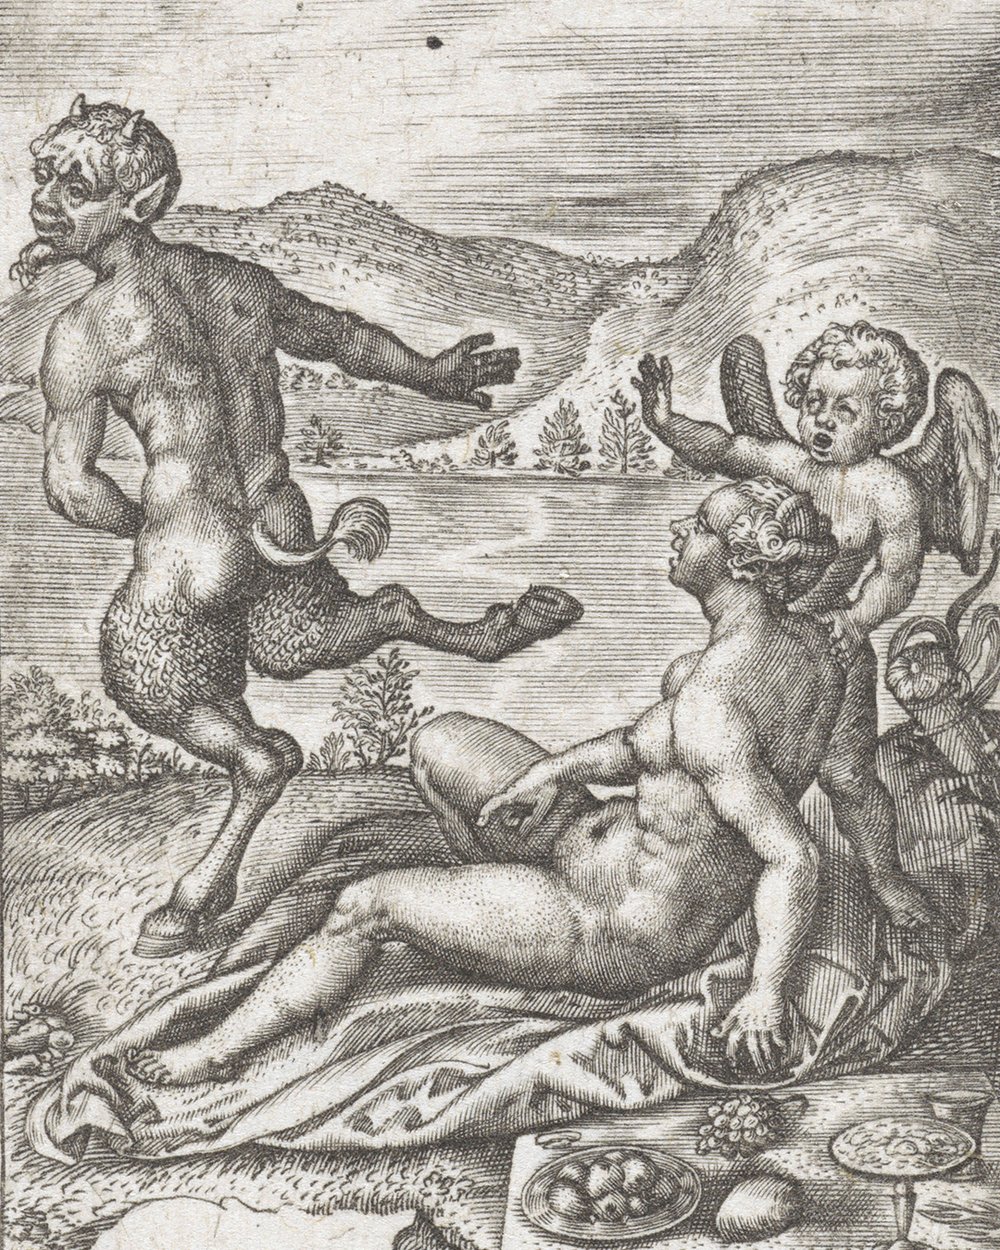 "Triumph of virtue over lust" (1600)